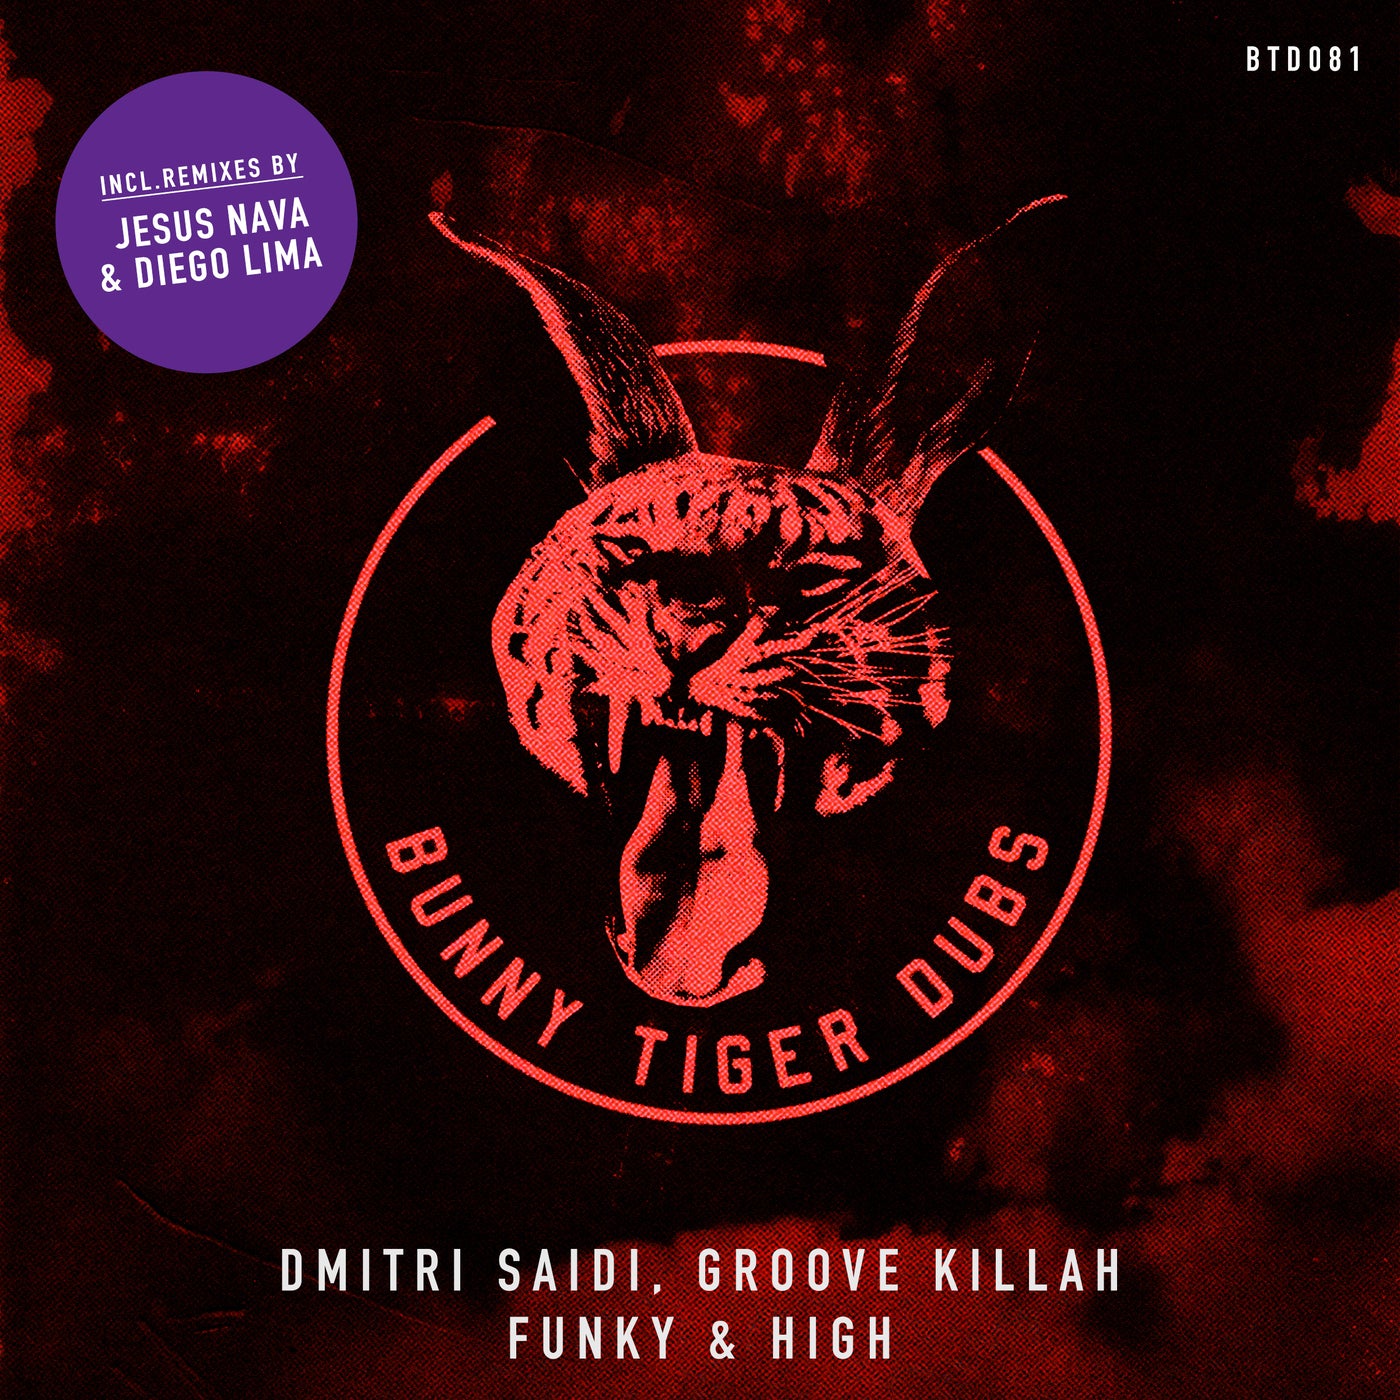 Dmitri Saidi, Groove Killah - Funky & High [BTD081]